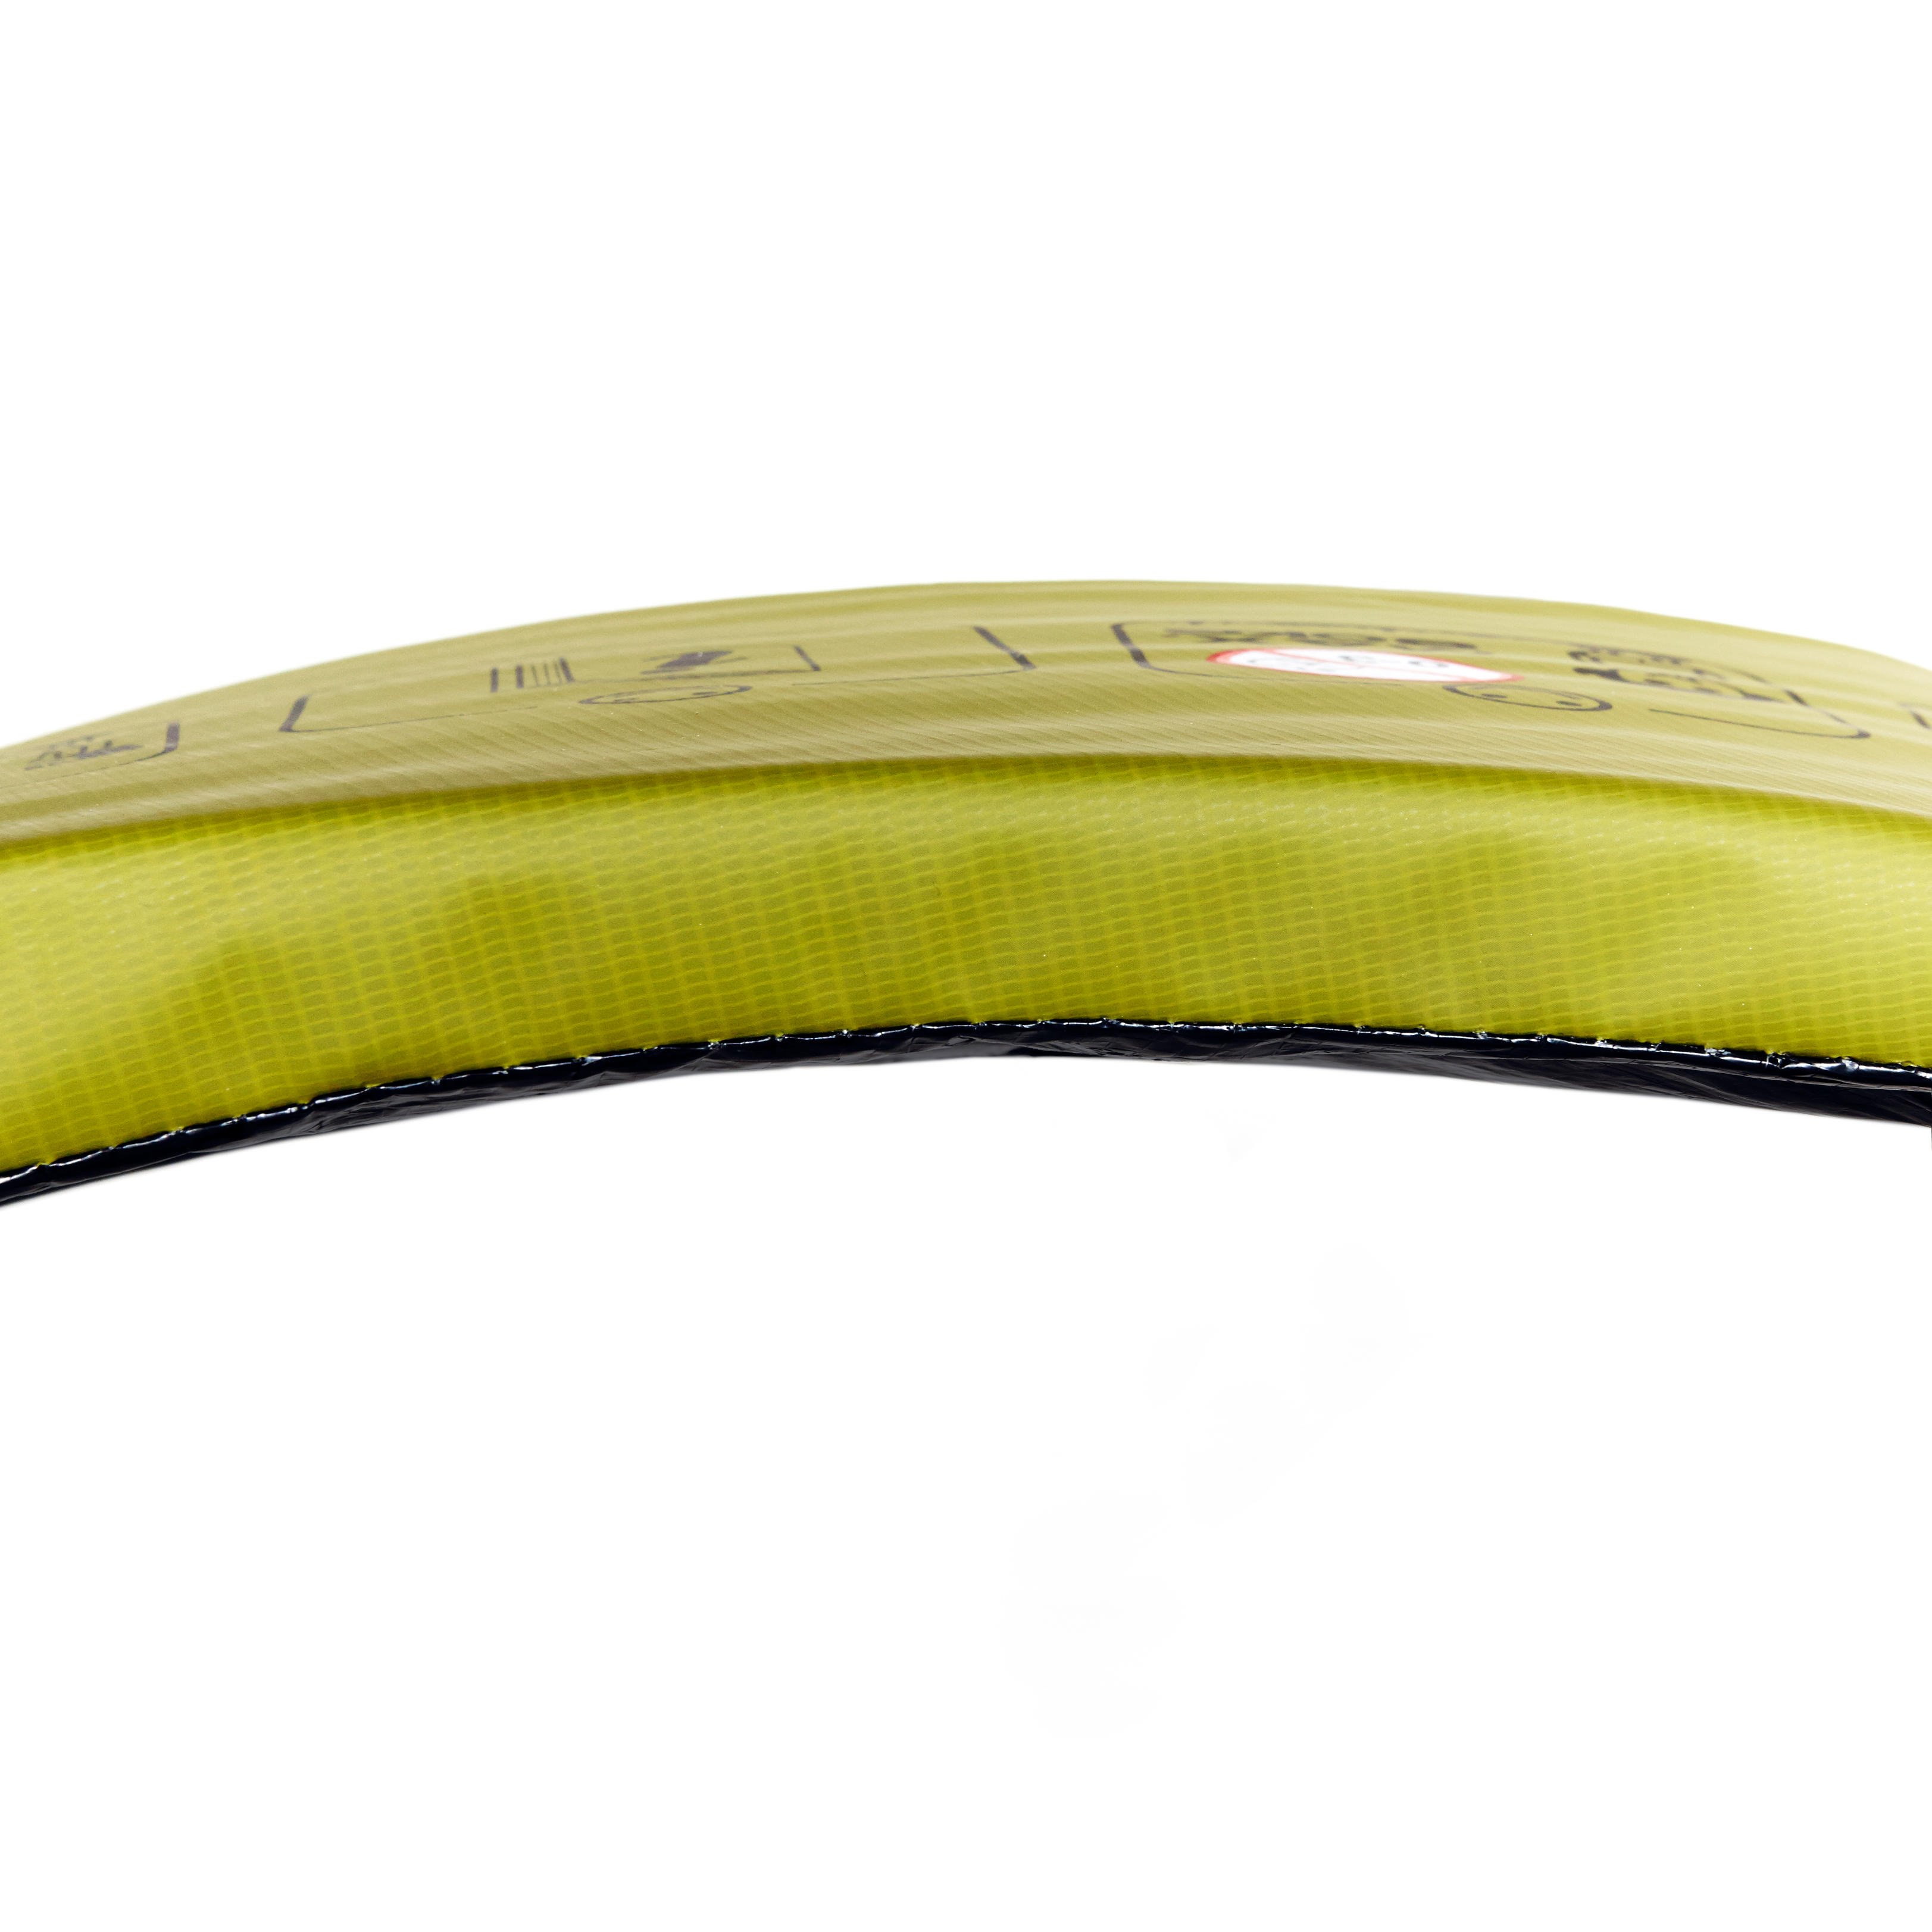 Trampoline 13'77'' (420 cm) de diamètre - Essential 420 - DOMYOS